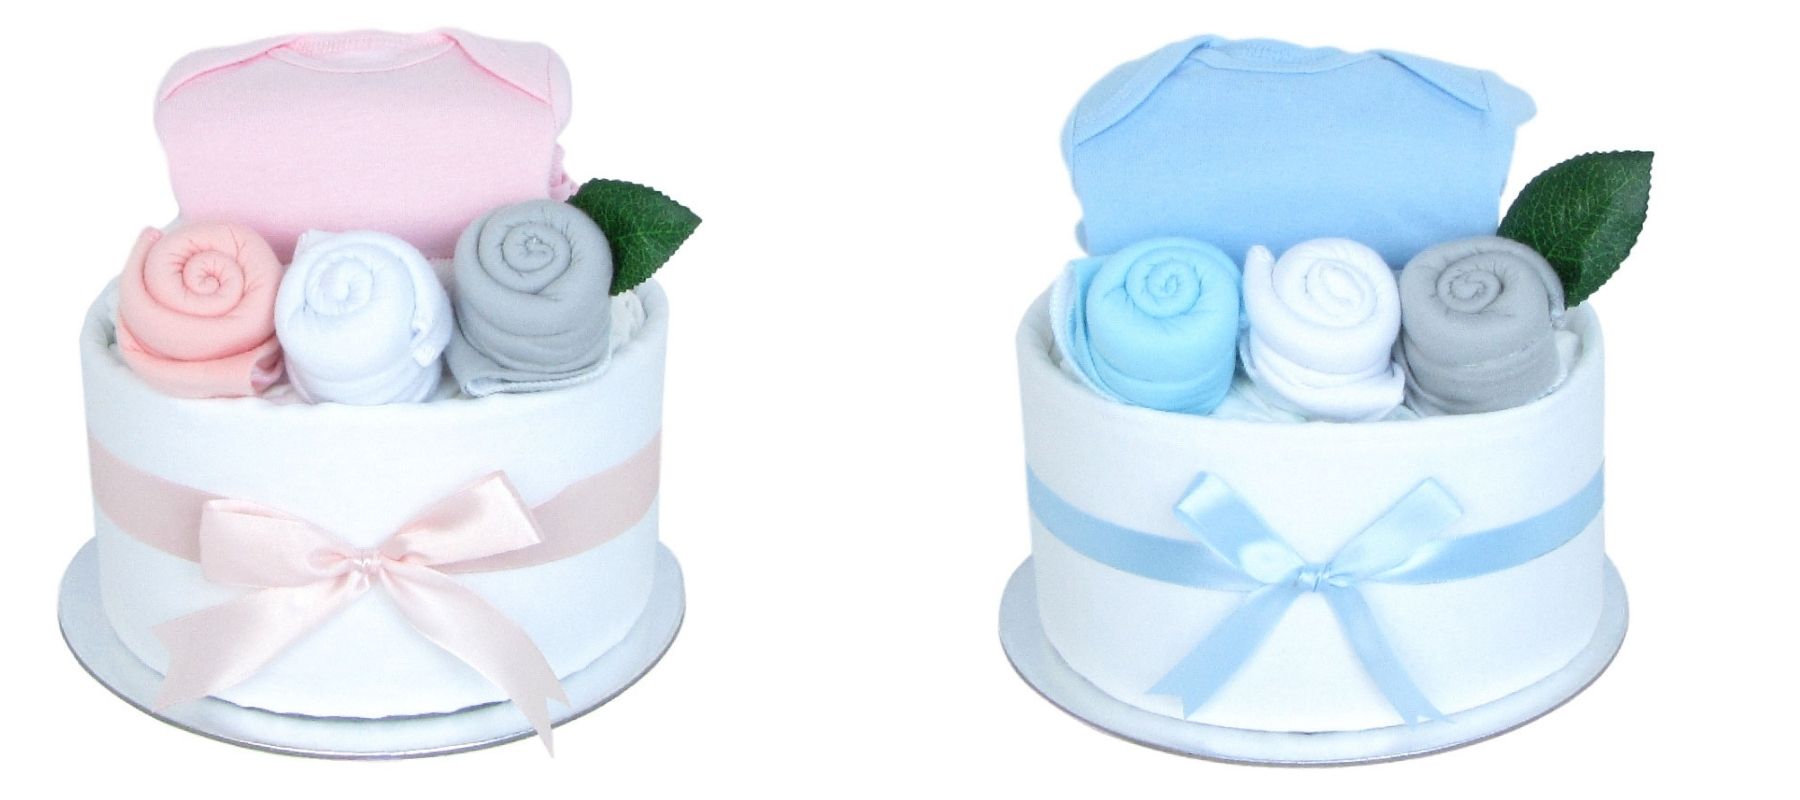 Amazon.com: Cutie Pie Newborn Baby Gift Basket for Girls -Pink : Baby